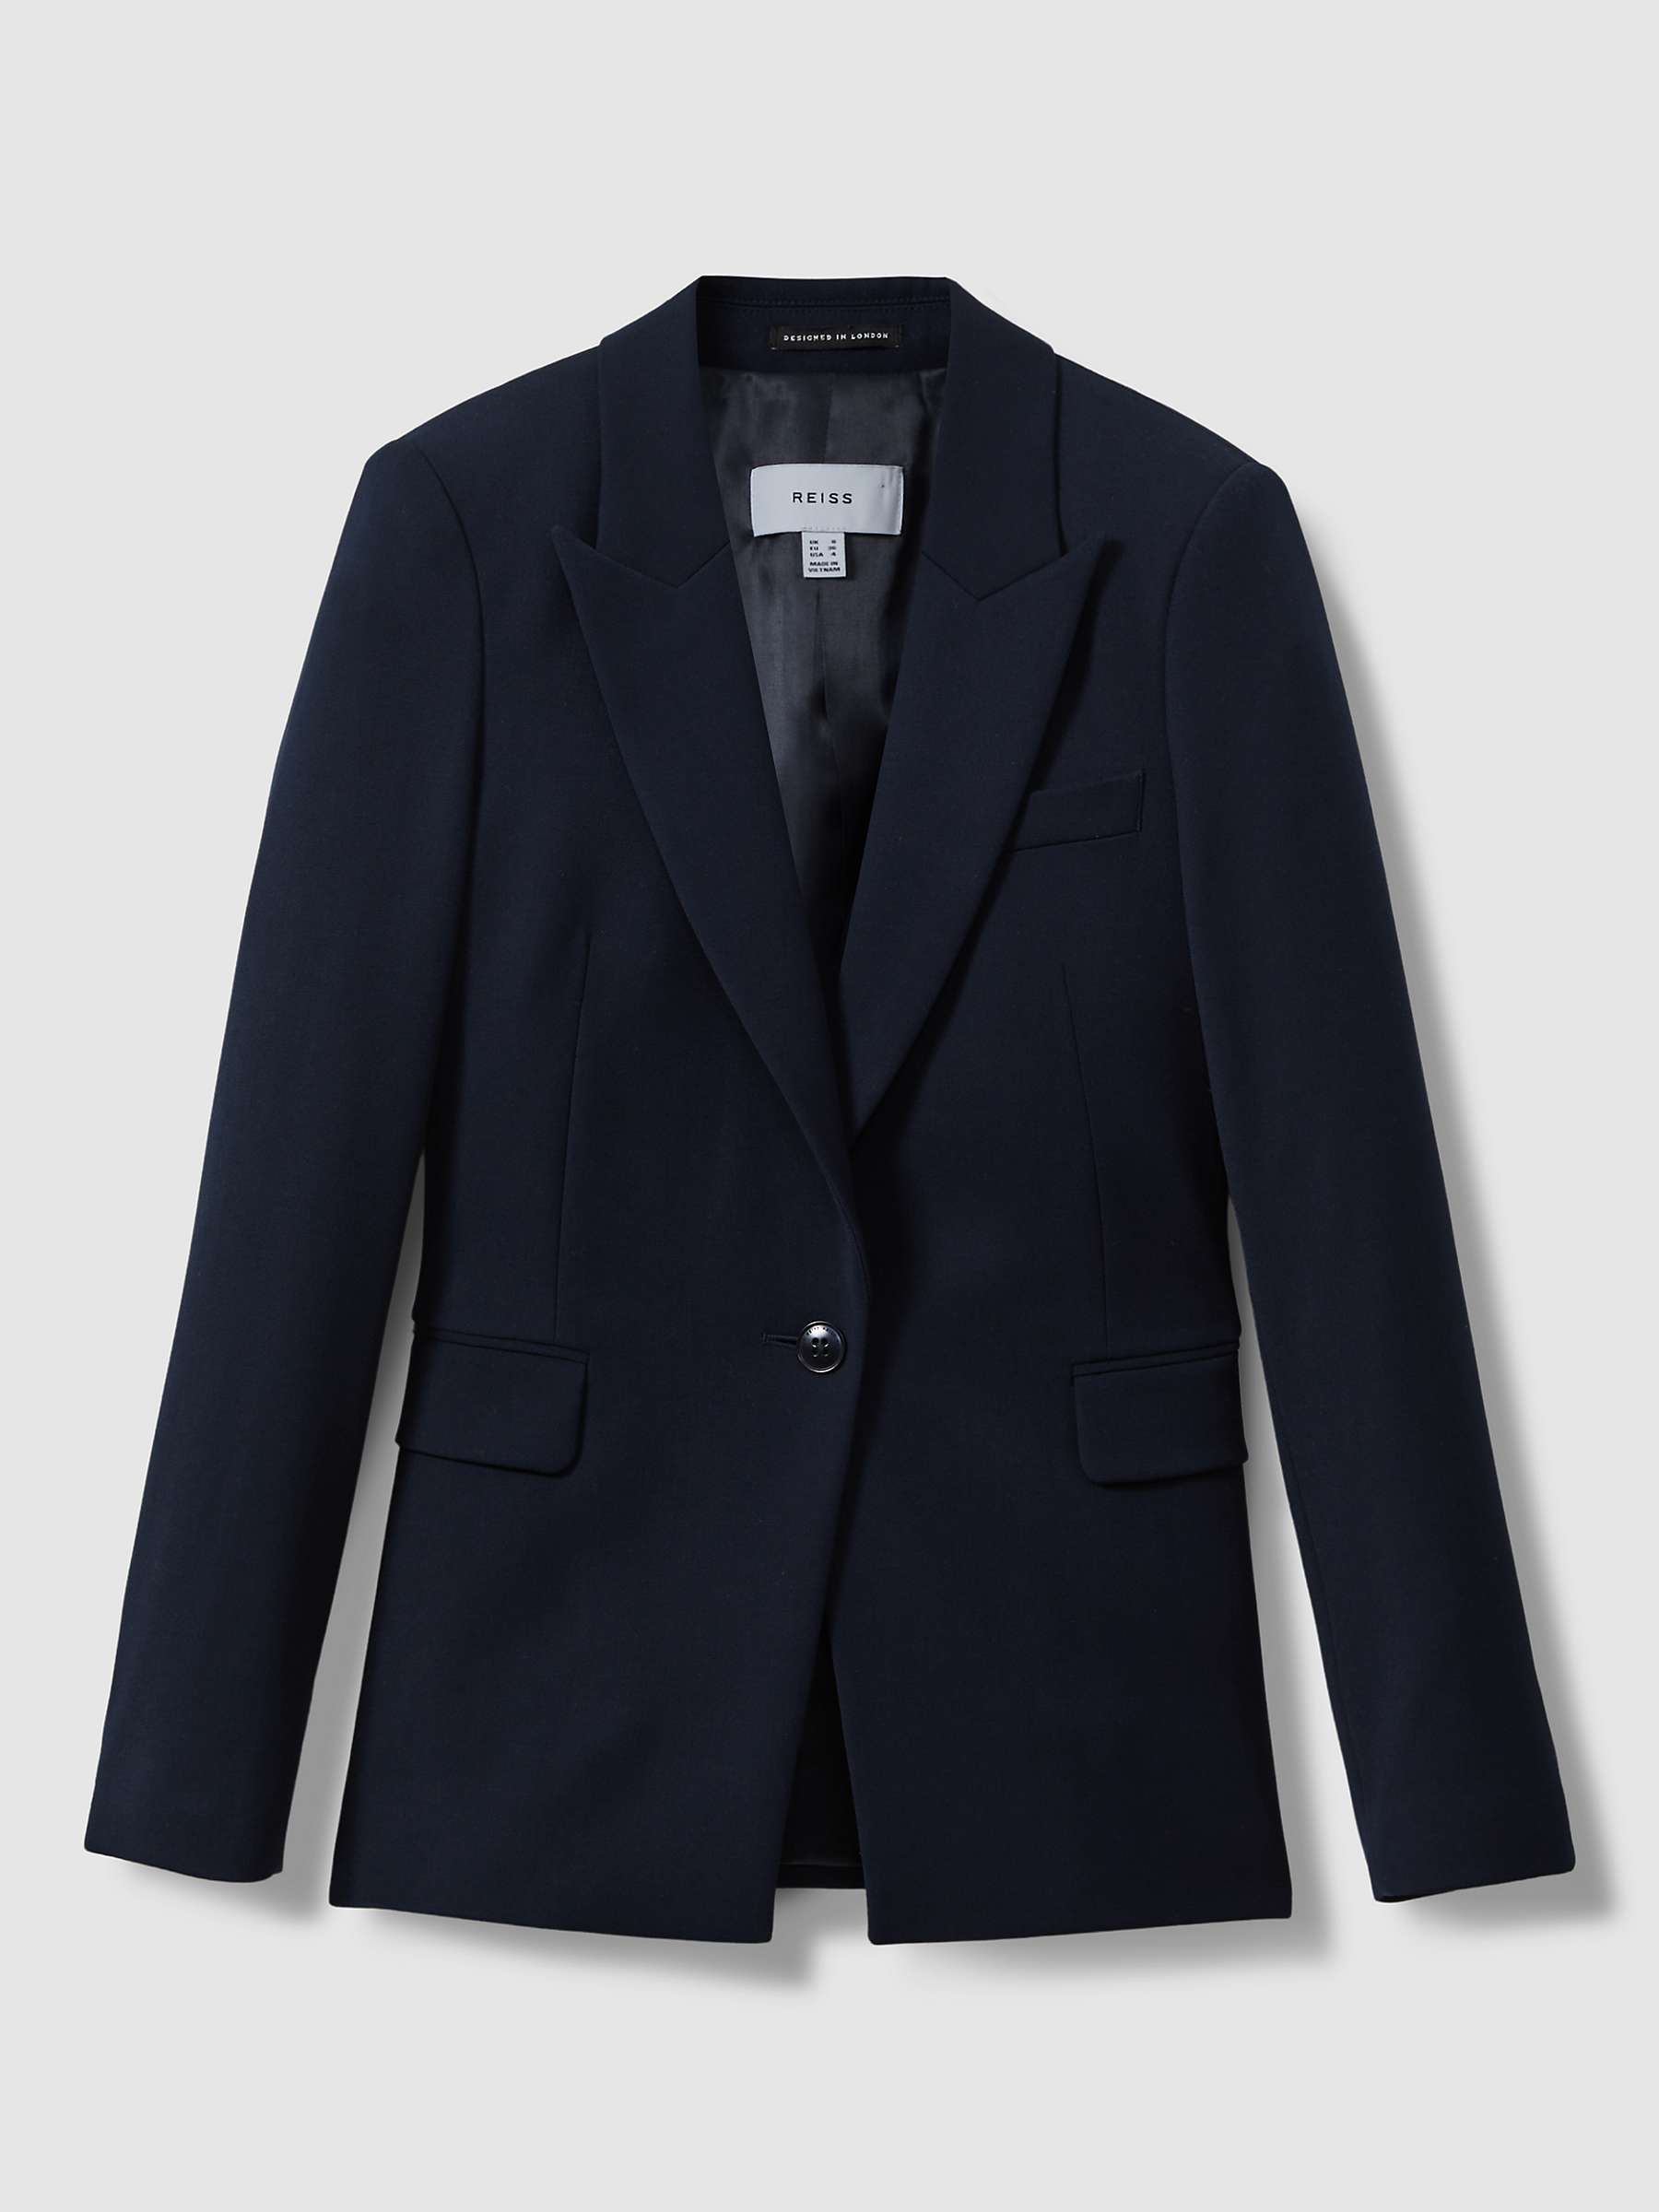 Buy Reiss Gabi Tailored Single Breasted Suit Blazer Online at johnlewis.com